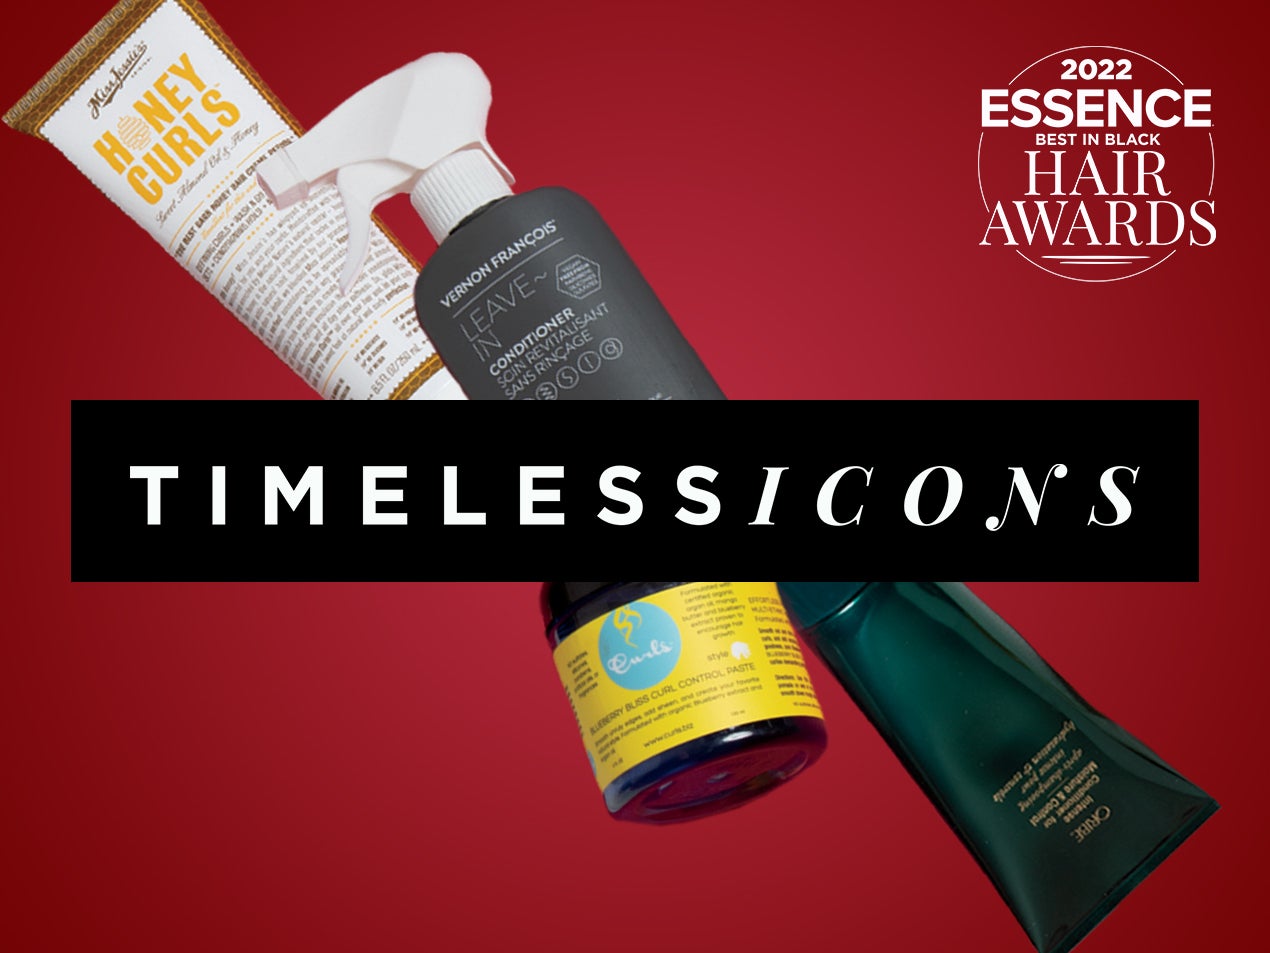 2022 Best In Black Hair Awards: Timeless Icons